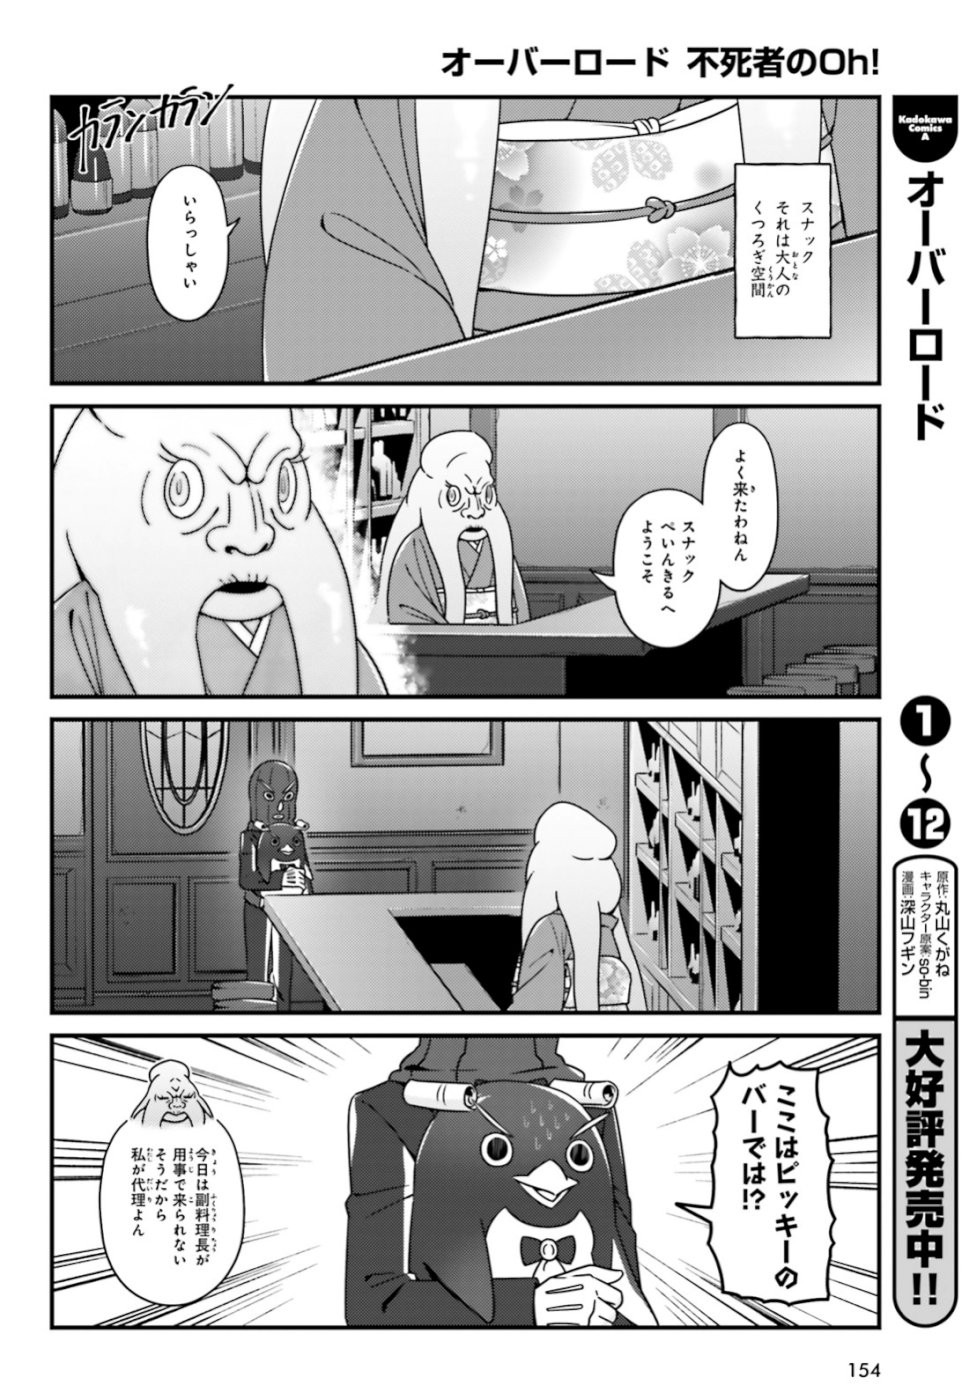 Overlord-Fushisha-no-Oh - Chapter 33 - Page 2